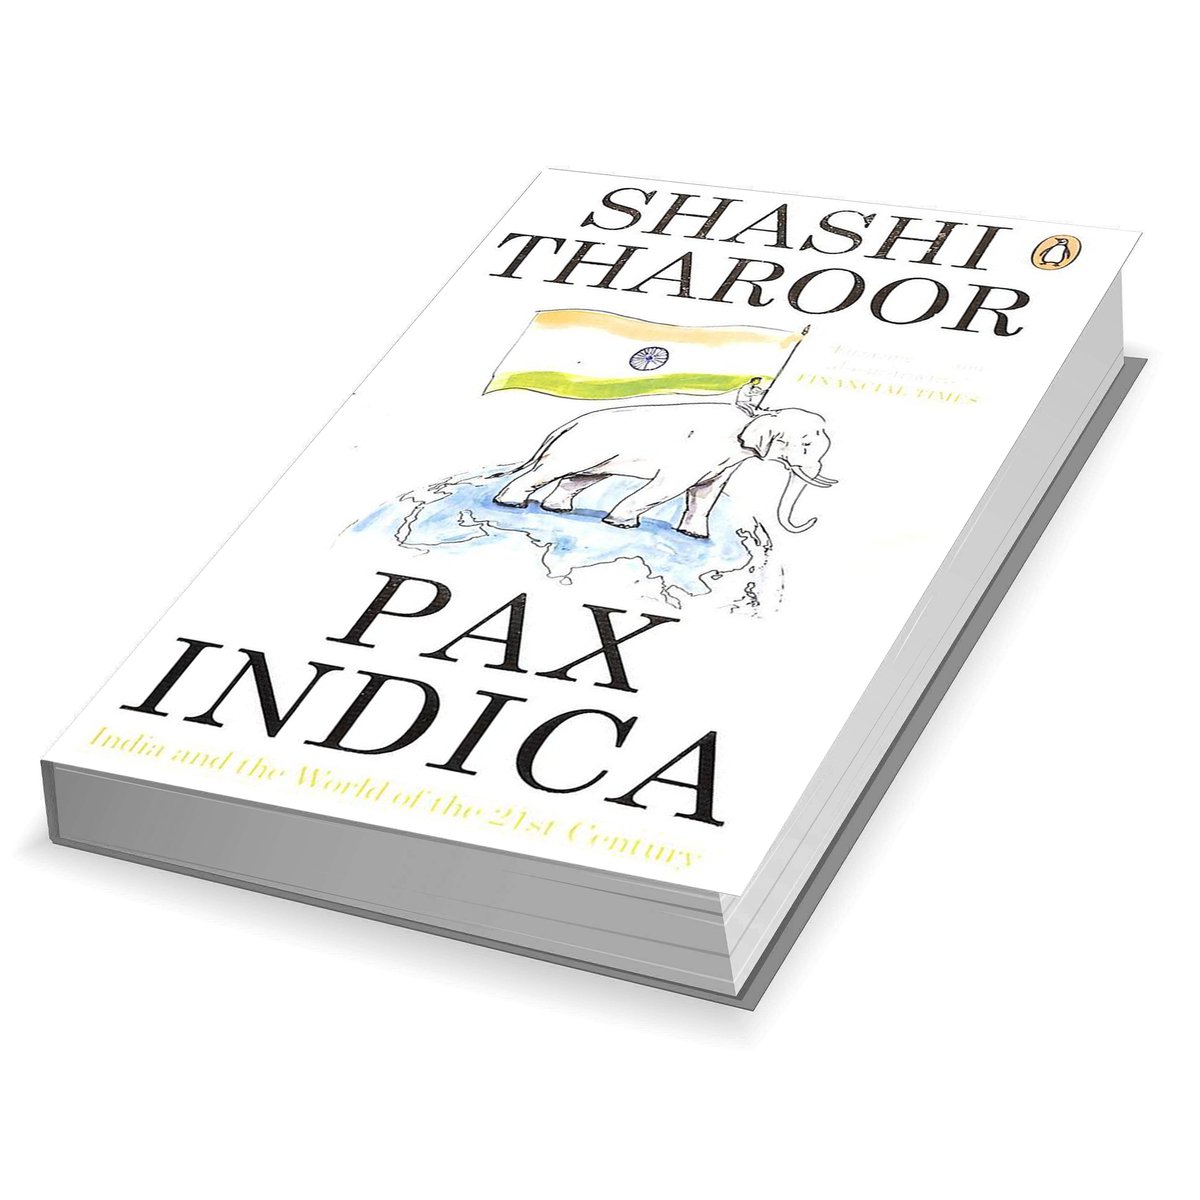 Pax Indica - Shashi Tharoor